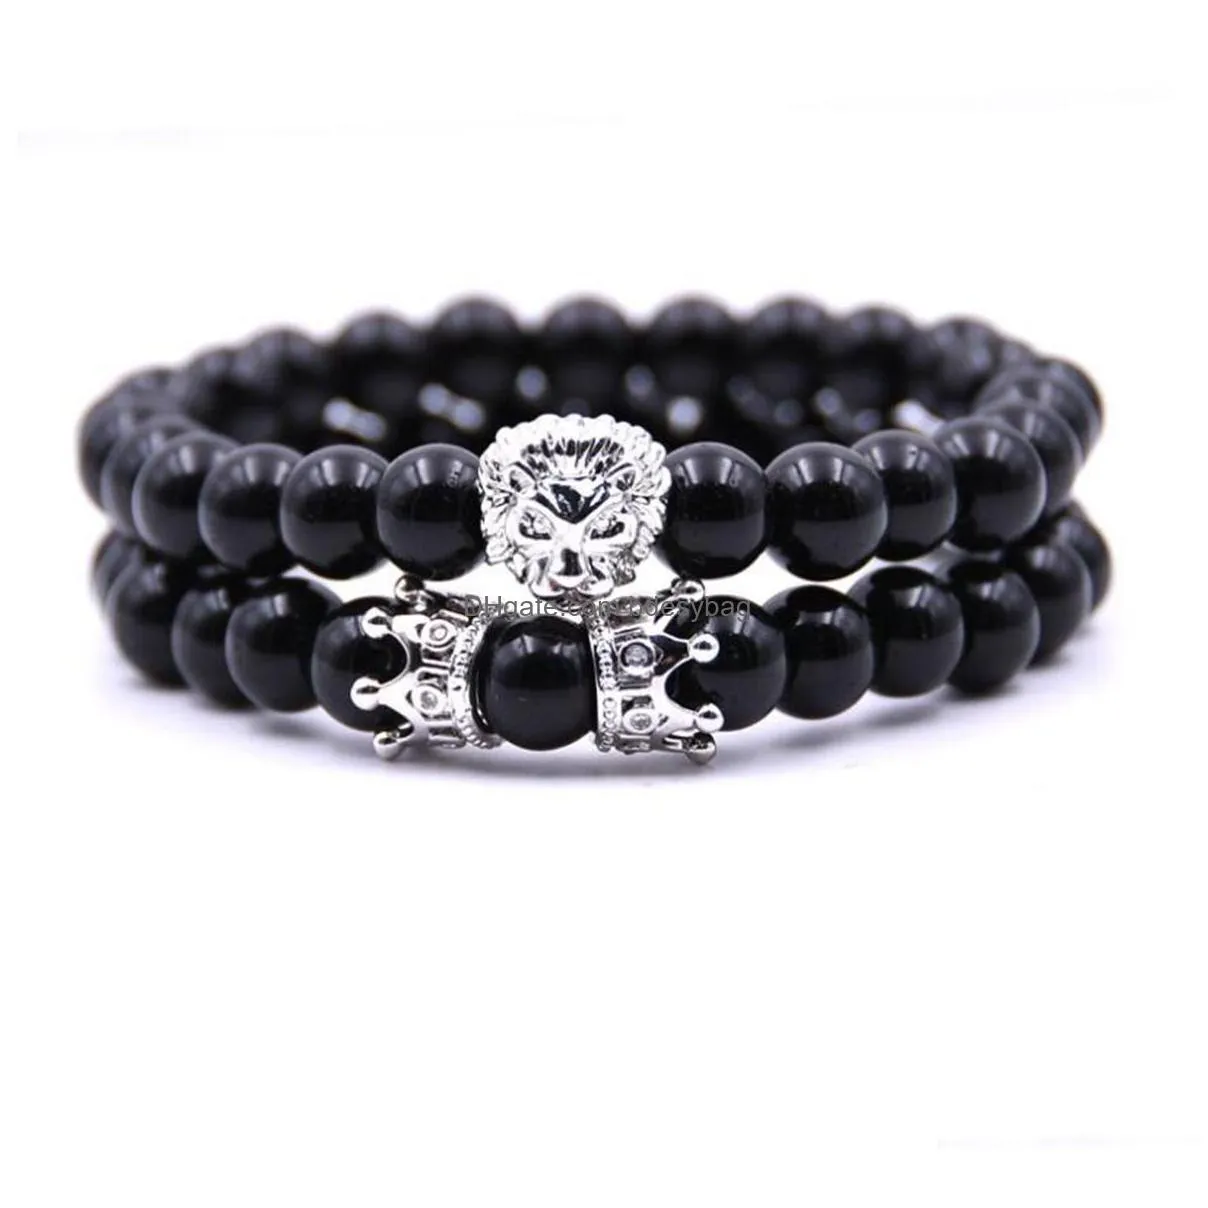 2 pcs/set animal king  head black onyx agate bracelet natural stone crown couple braclet sets for men hand jewelry accessories